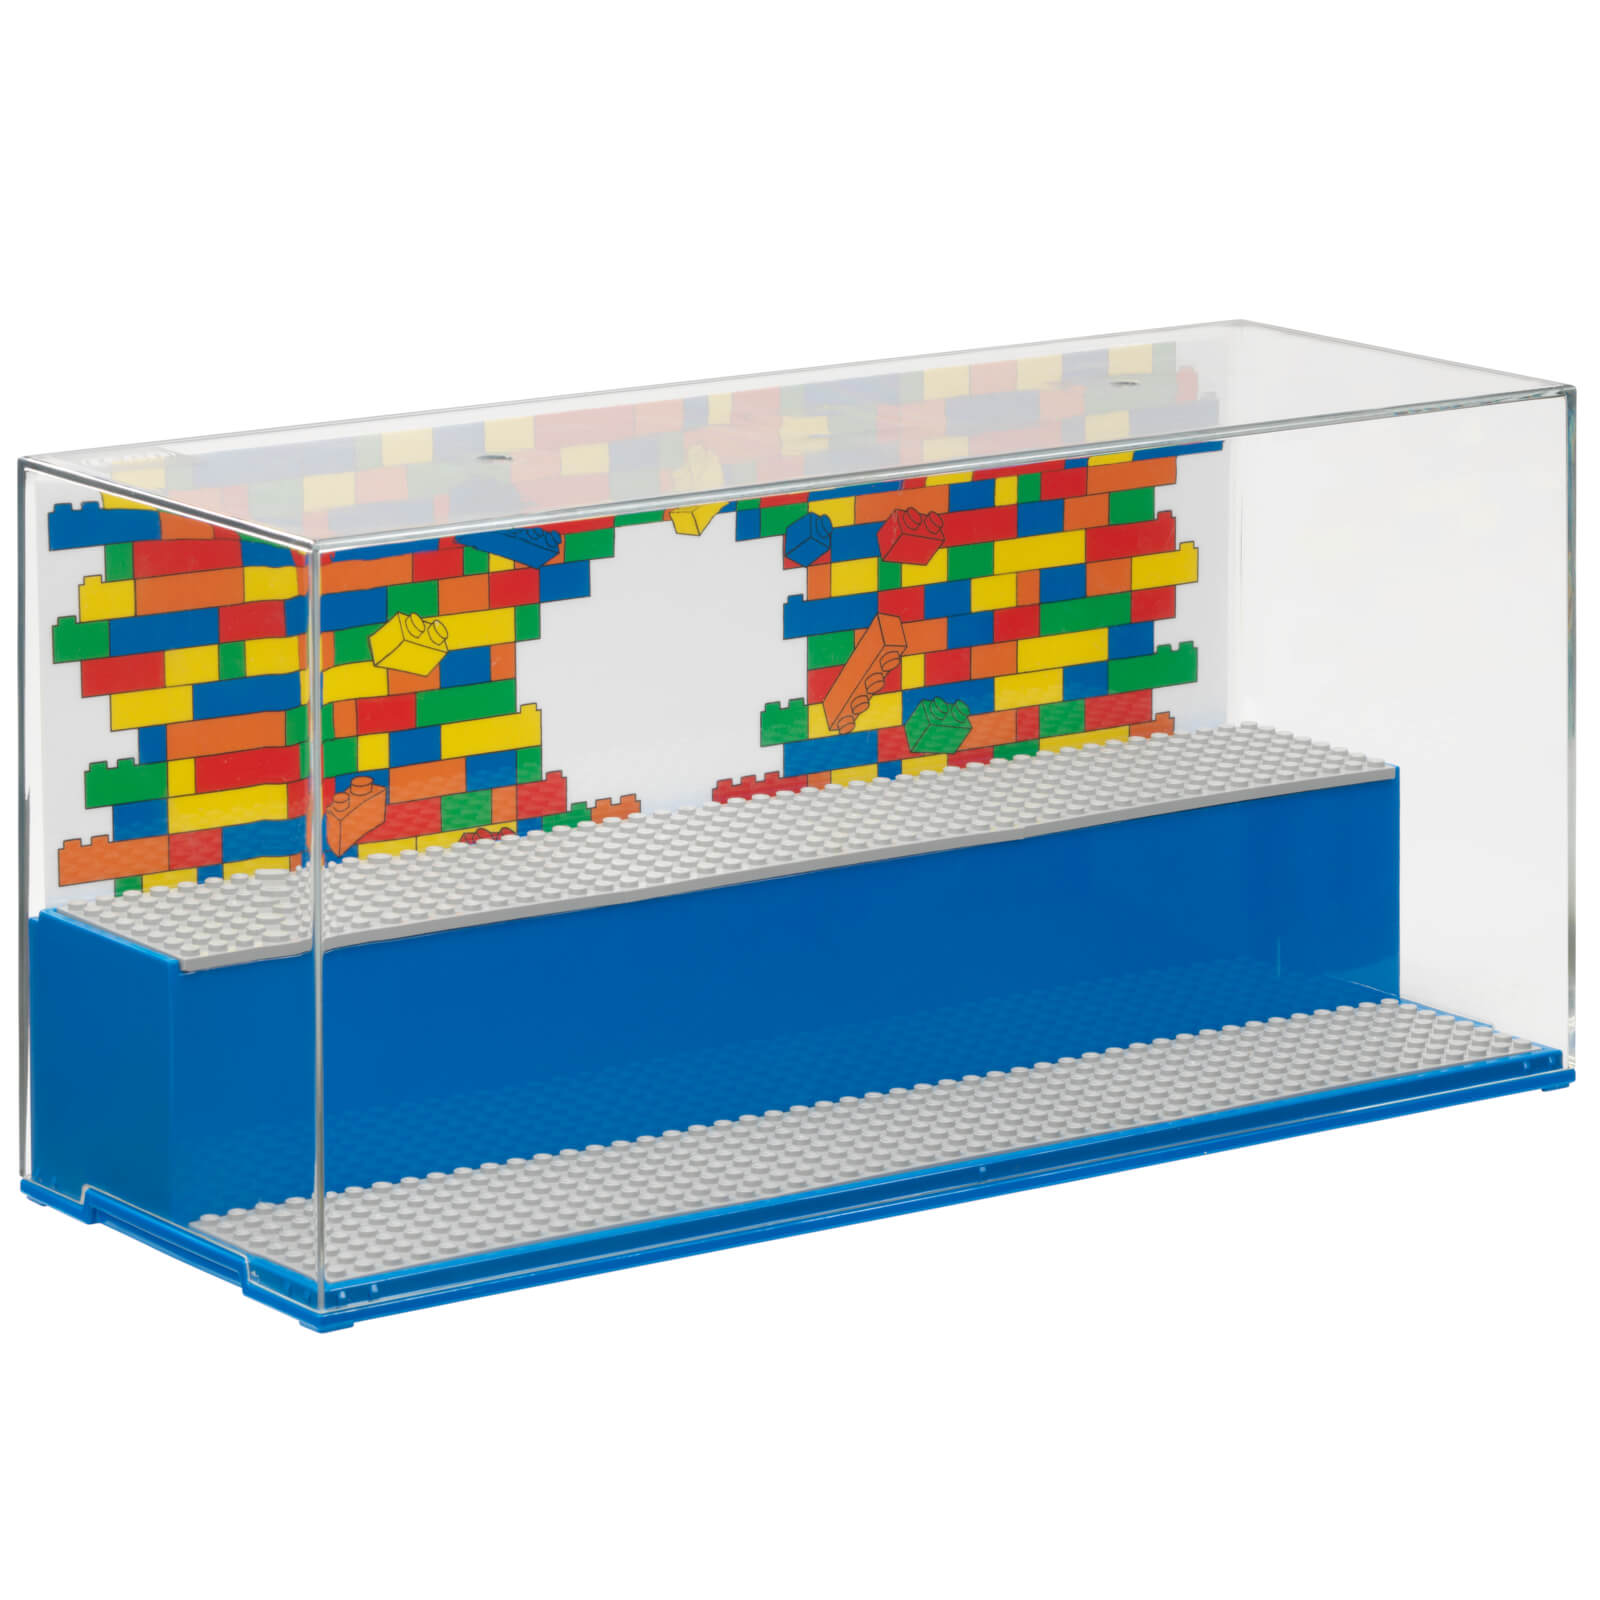 LEGO Play & Display Case - Blue